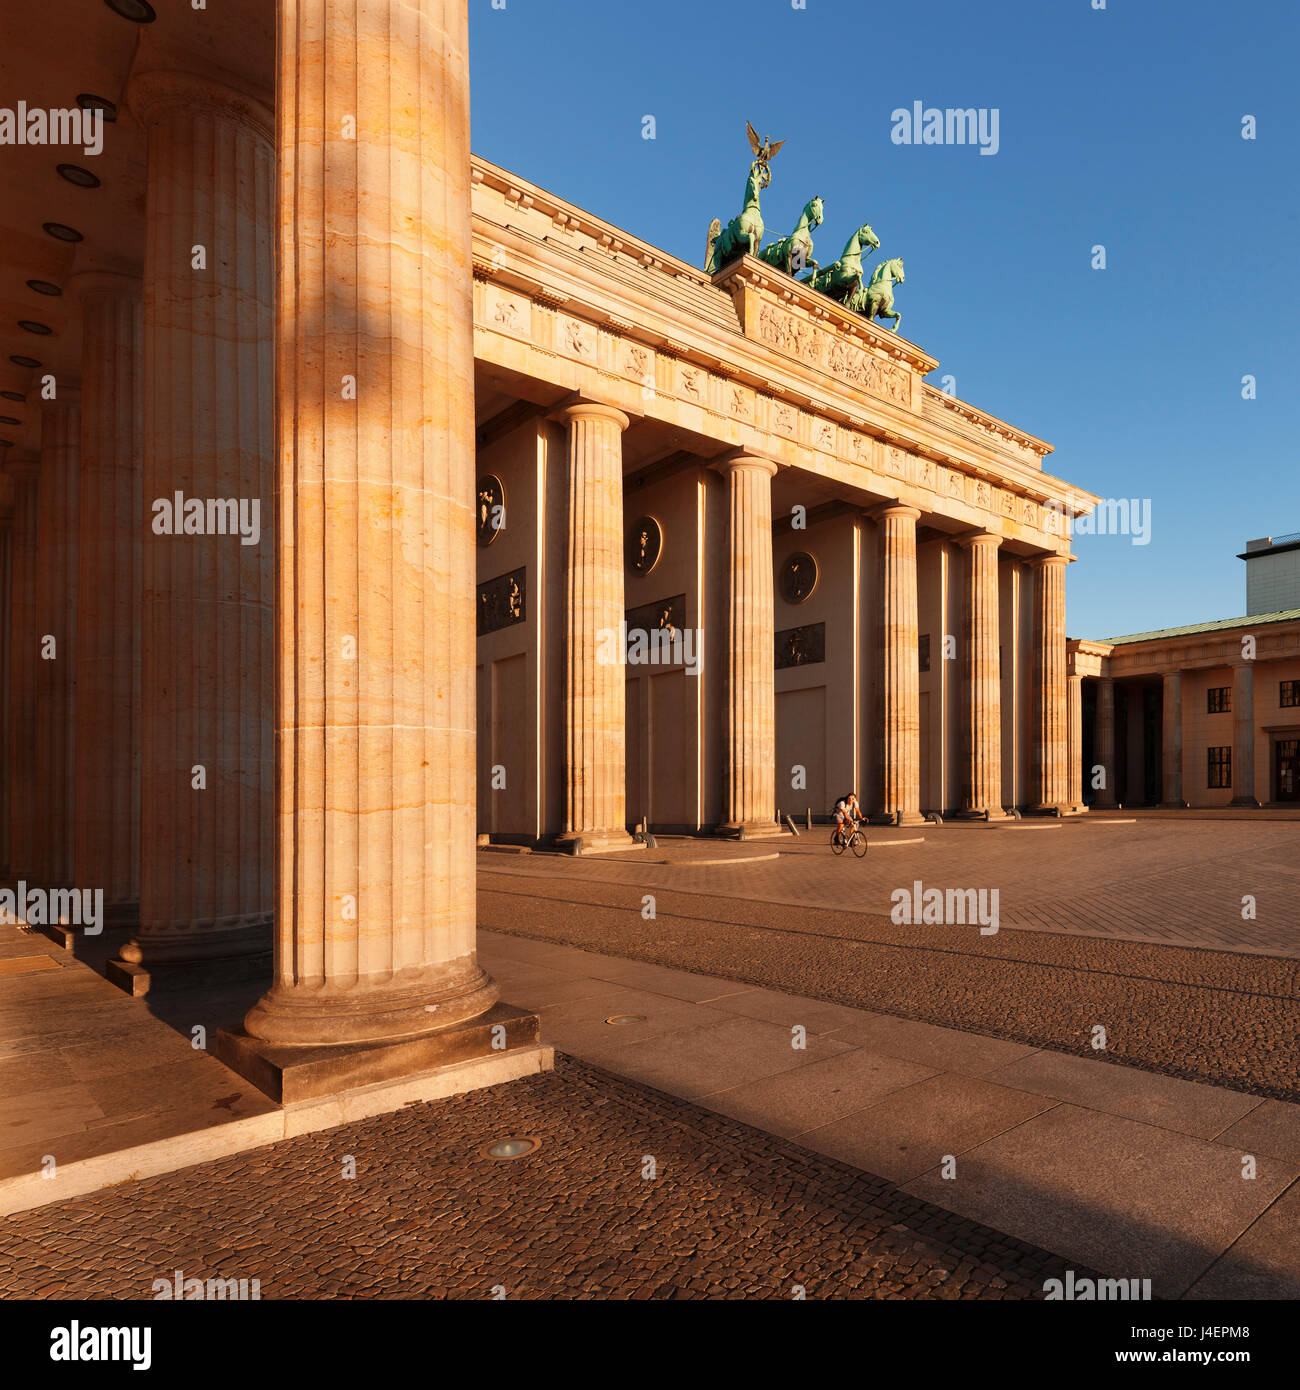 Porte de Brandebourg (Brandenburger Tor) au lever du soleil, Quadrige, Berlin Mitte, Berlin, Germany, Europe Banque D'Images